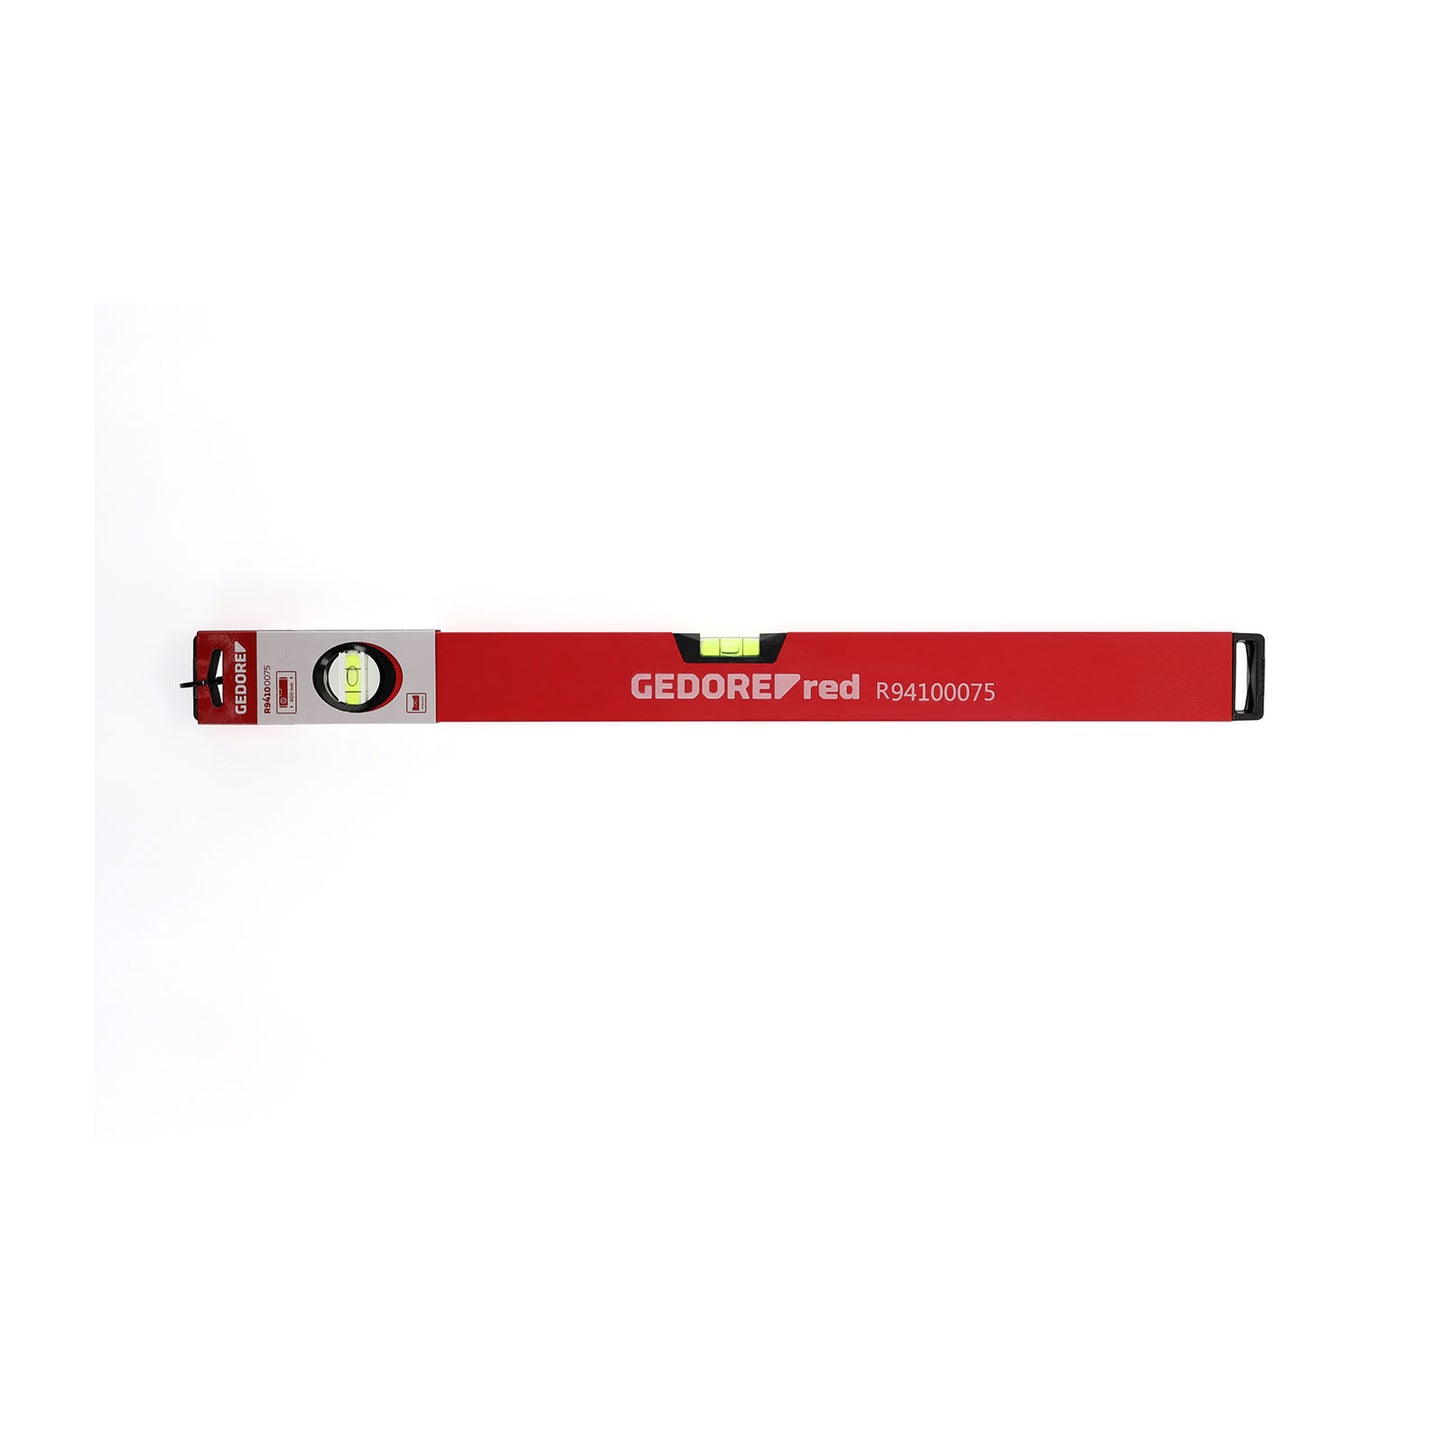 GEDORE red R94100075 - Nivel de burbuja 600mm con cuerpo de aluminio (3301436)